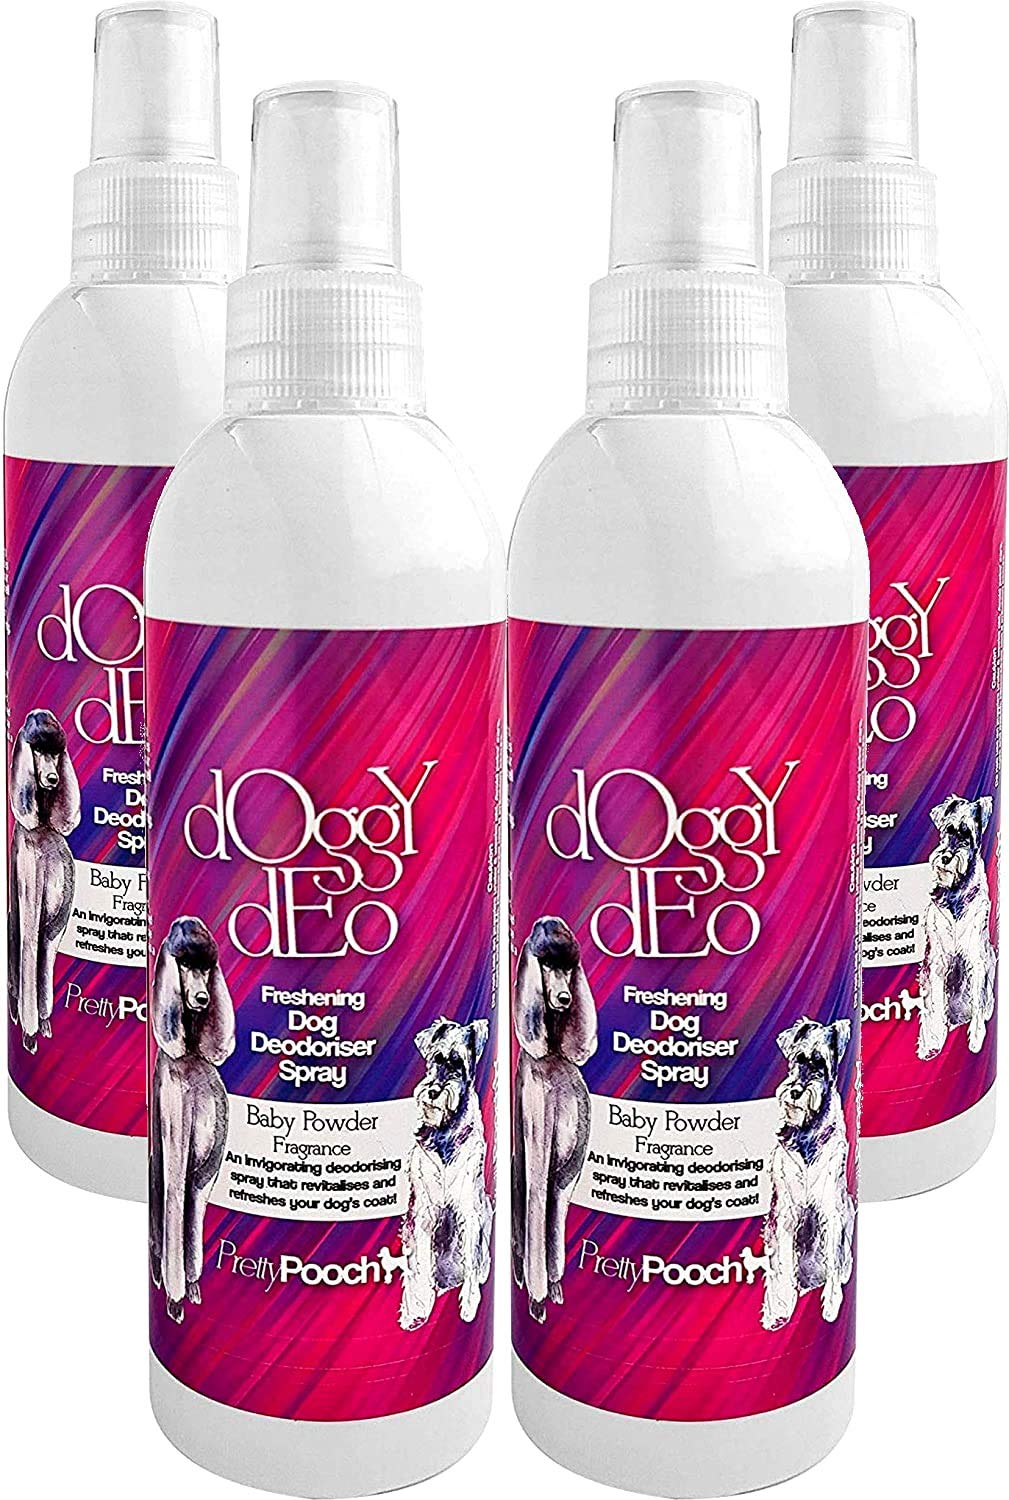 Pretty Pooch Dog Deodoriser Spray Perfume - Baby Powder - 4 Pack of 250ml - Dry Shampoo Spray for Dogs - Made in the UK - PawsPlanet Australia